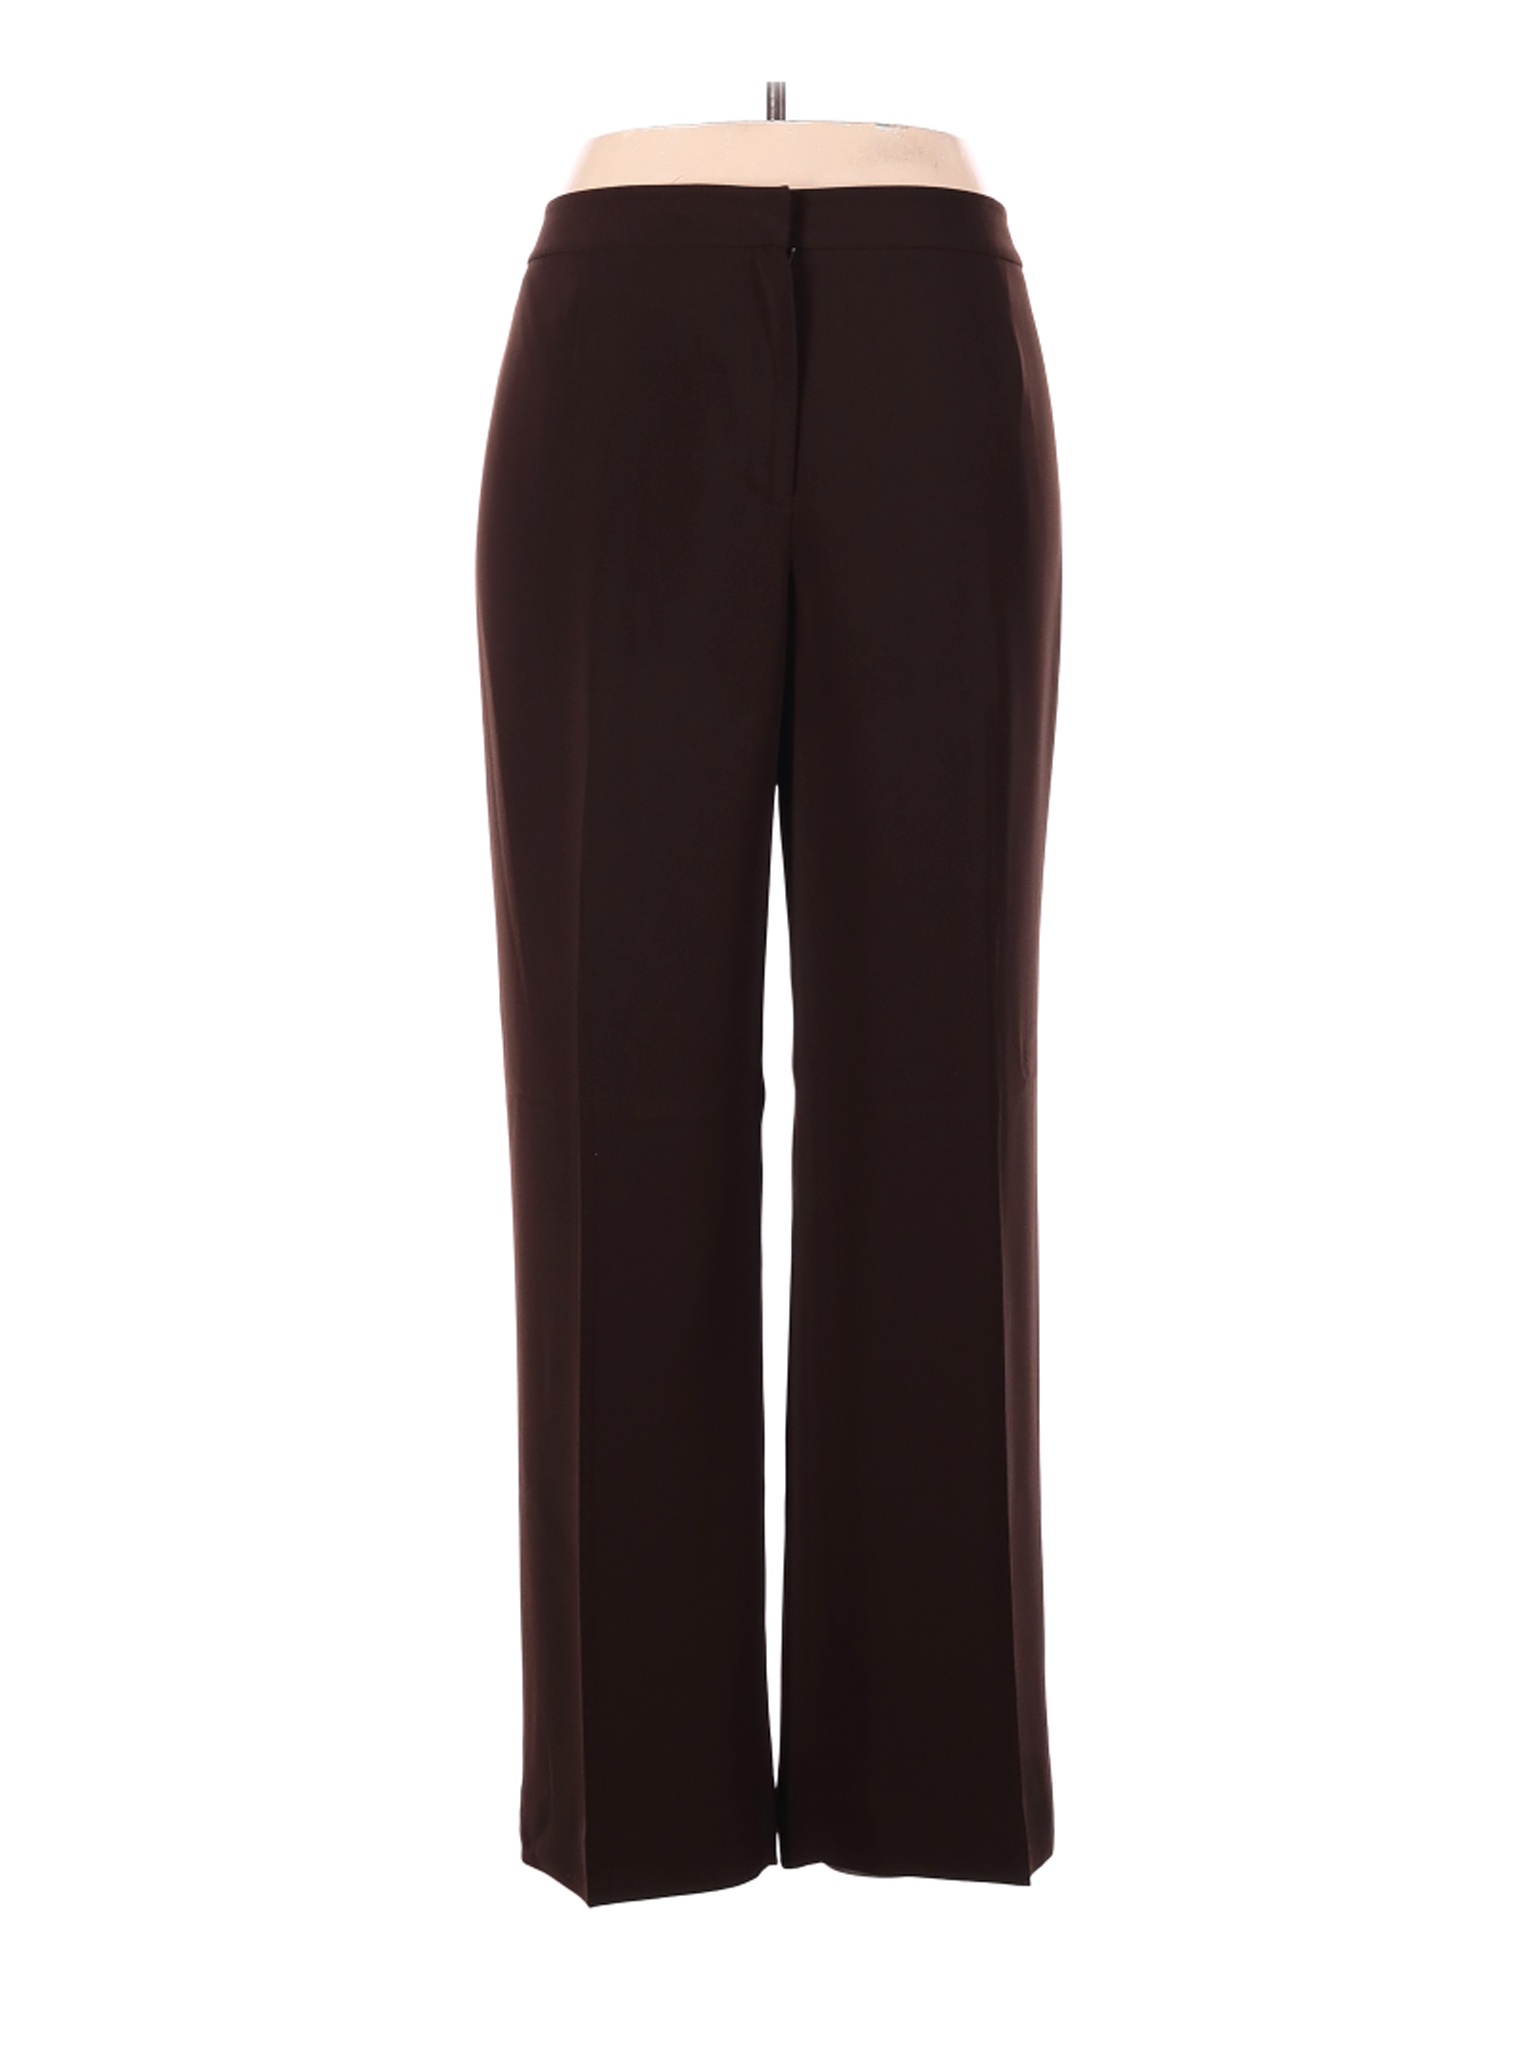 Kasper Women Brown Dress Pants 14 Petites | eBay